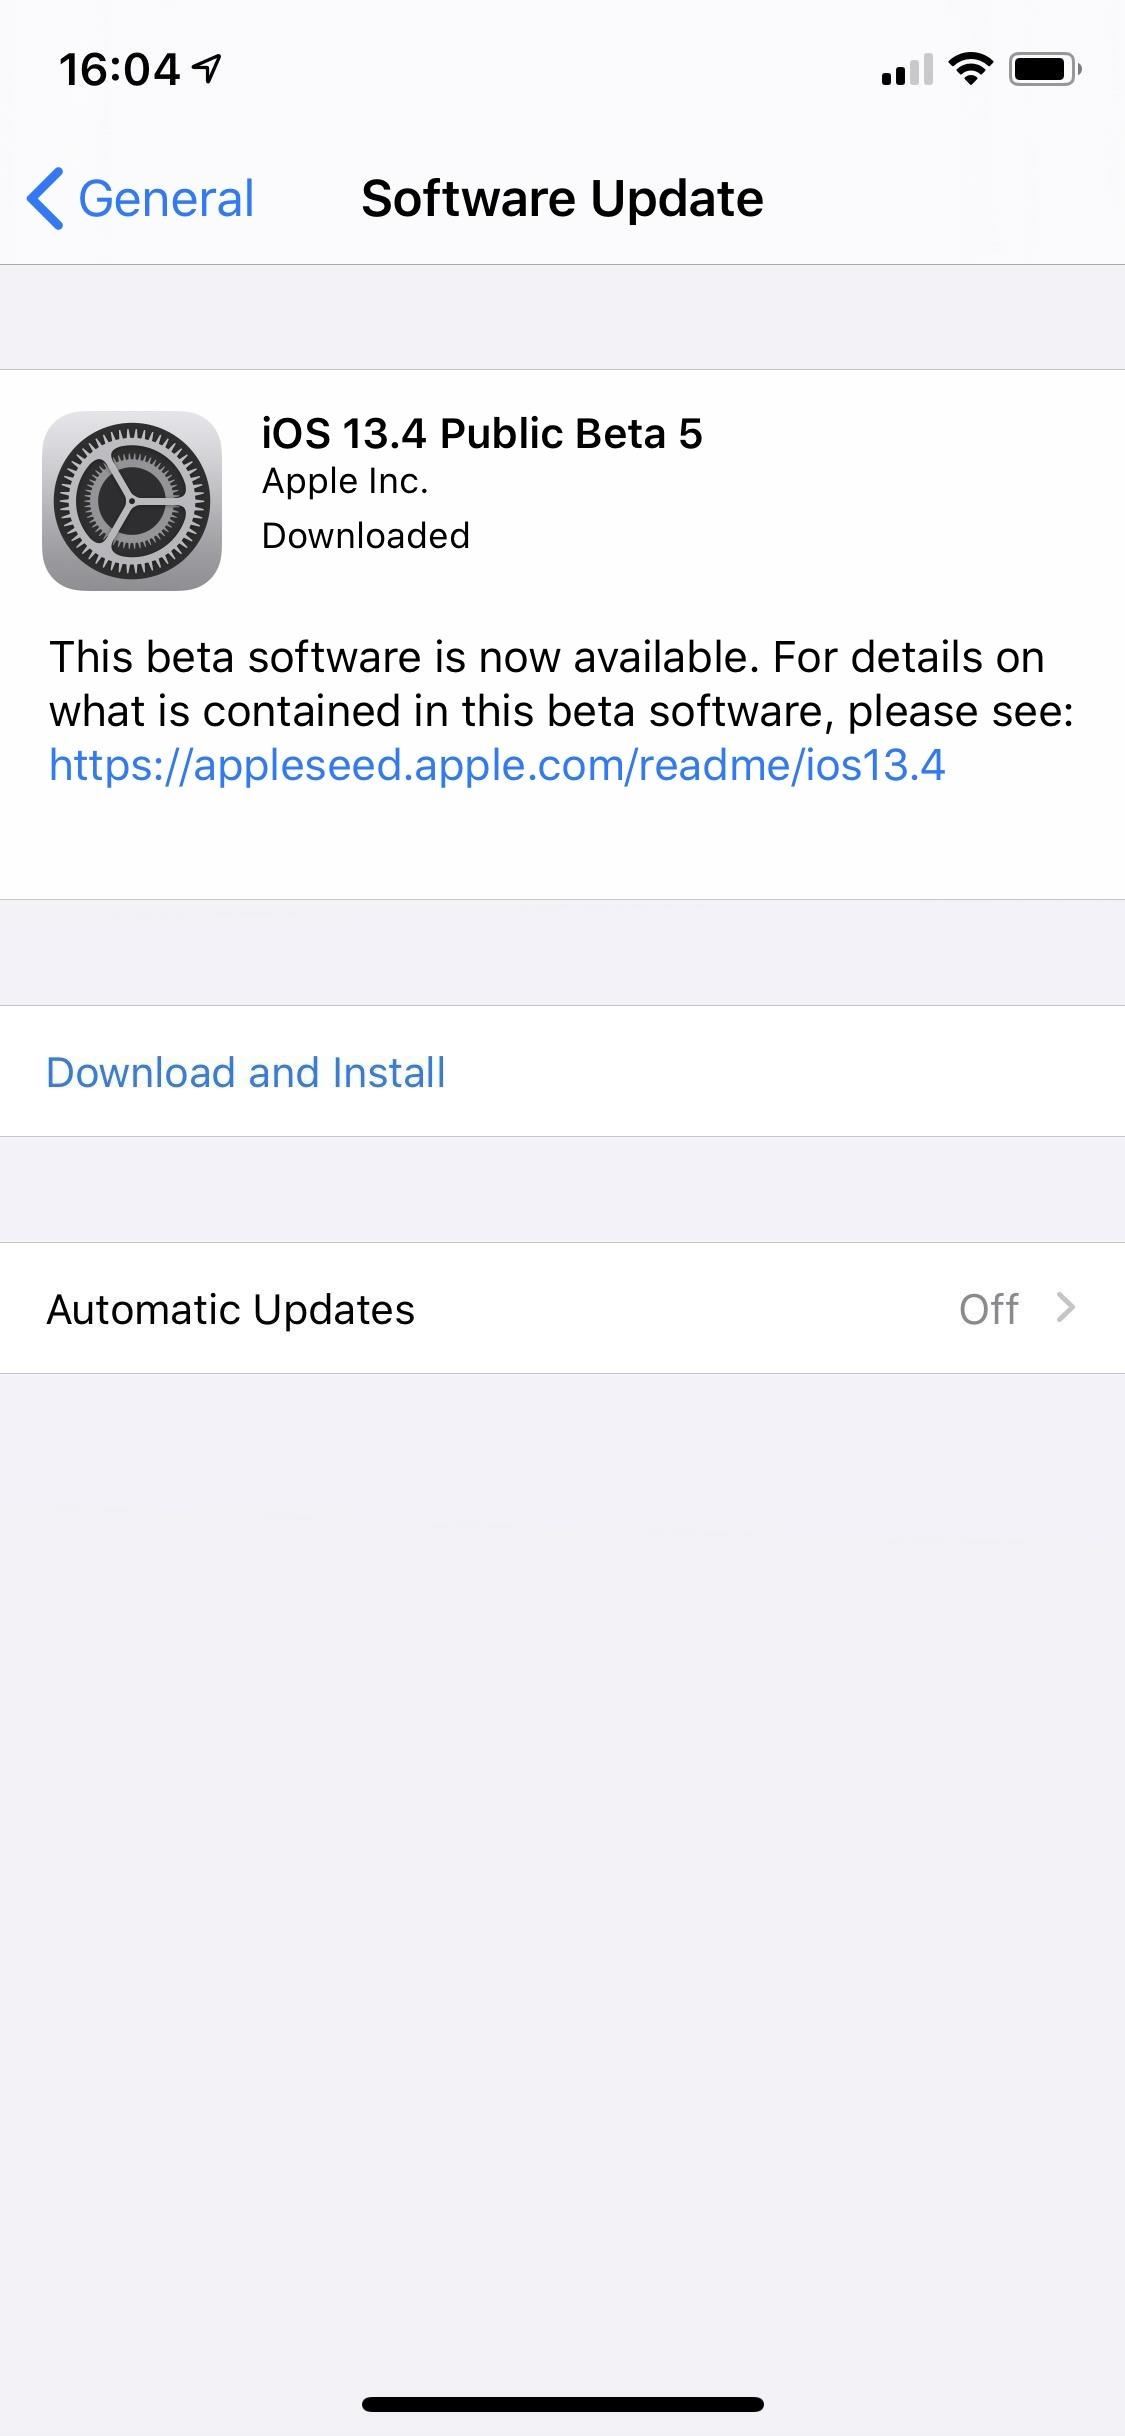 Apple Releases iOS 13.4 Public Beta 5 for iPhone